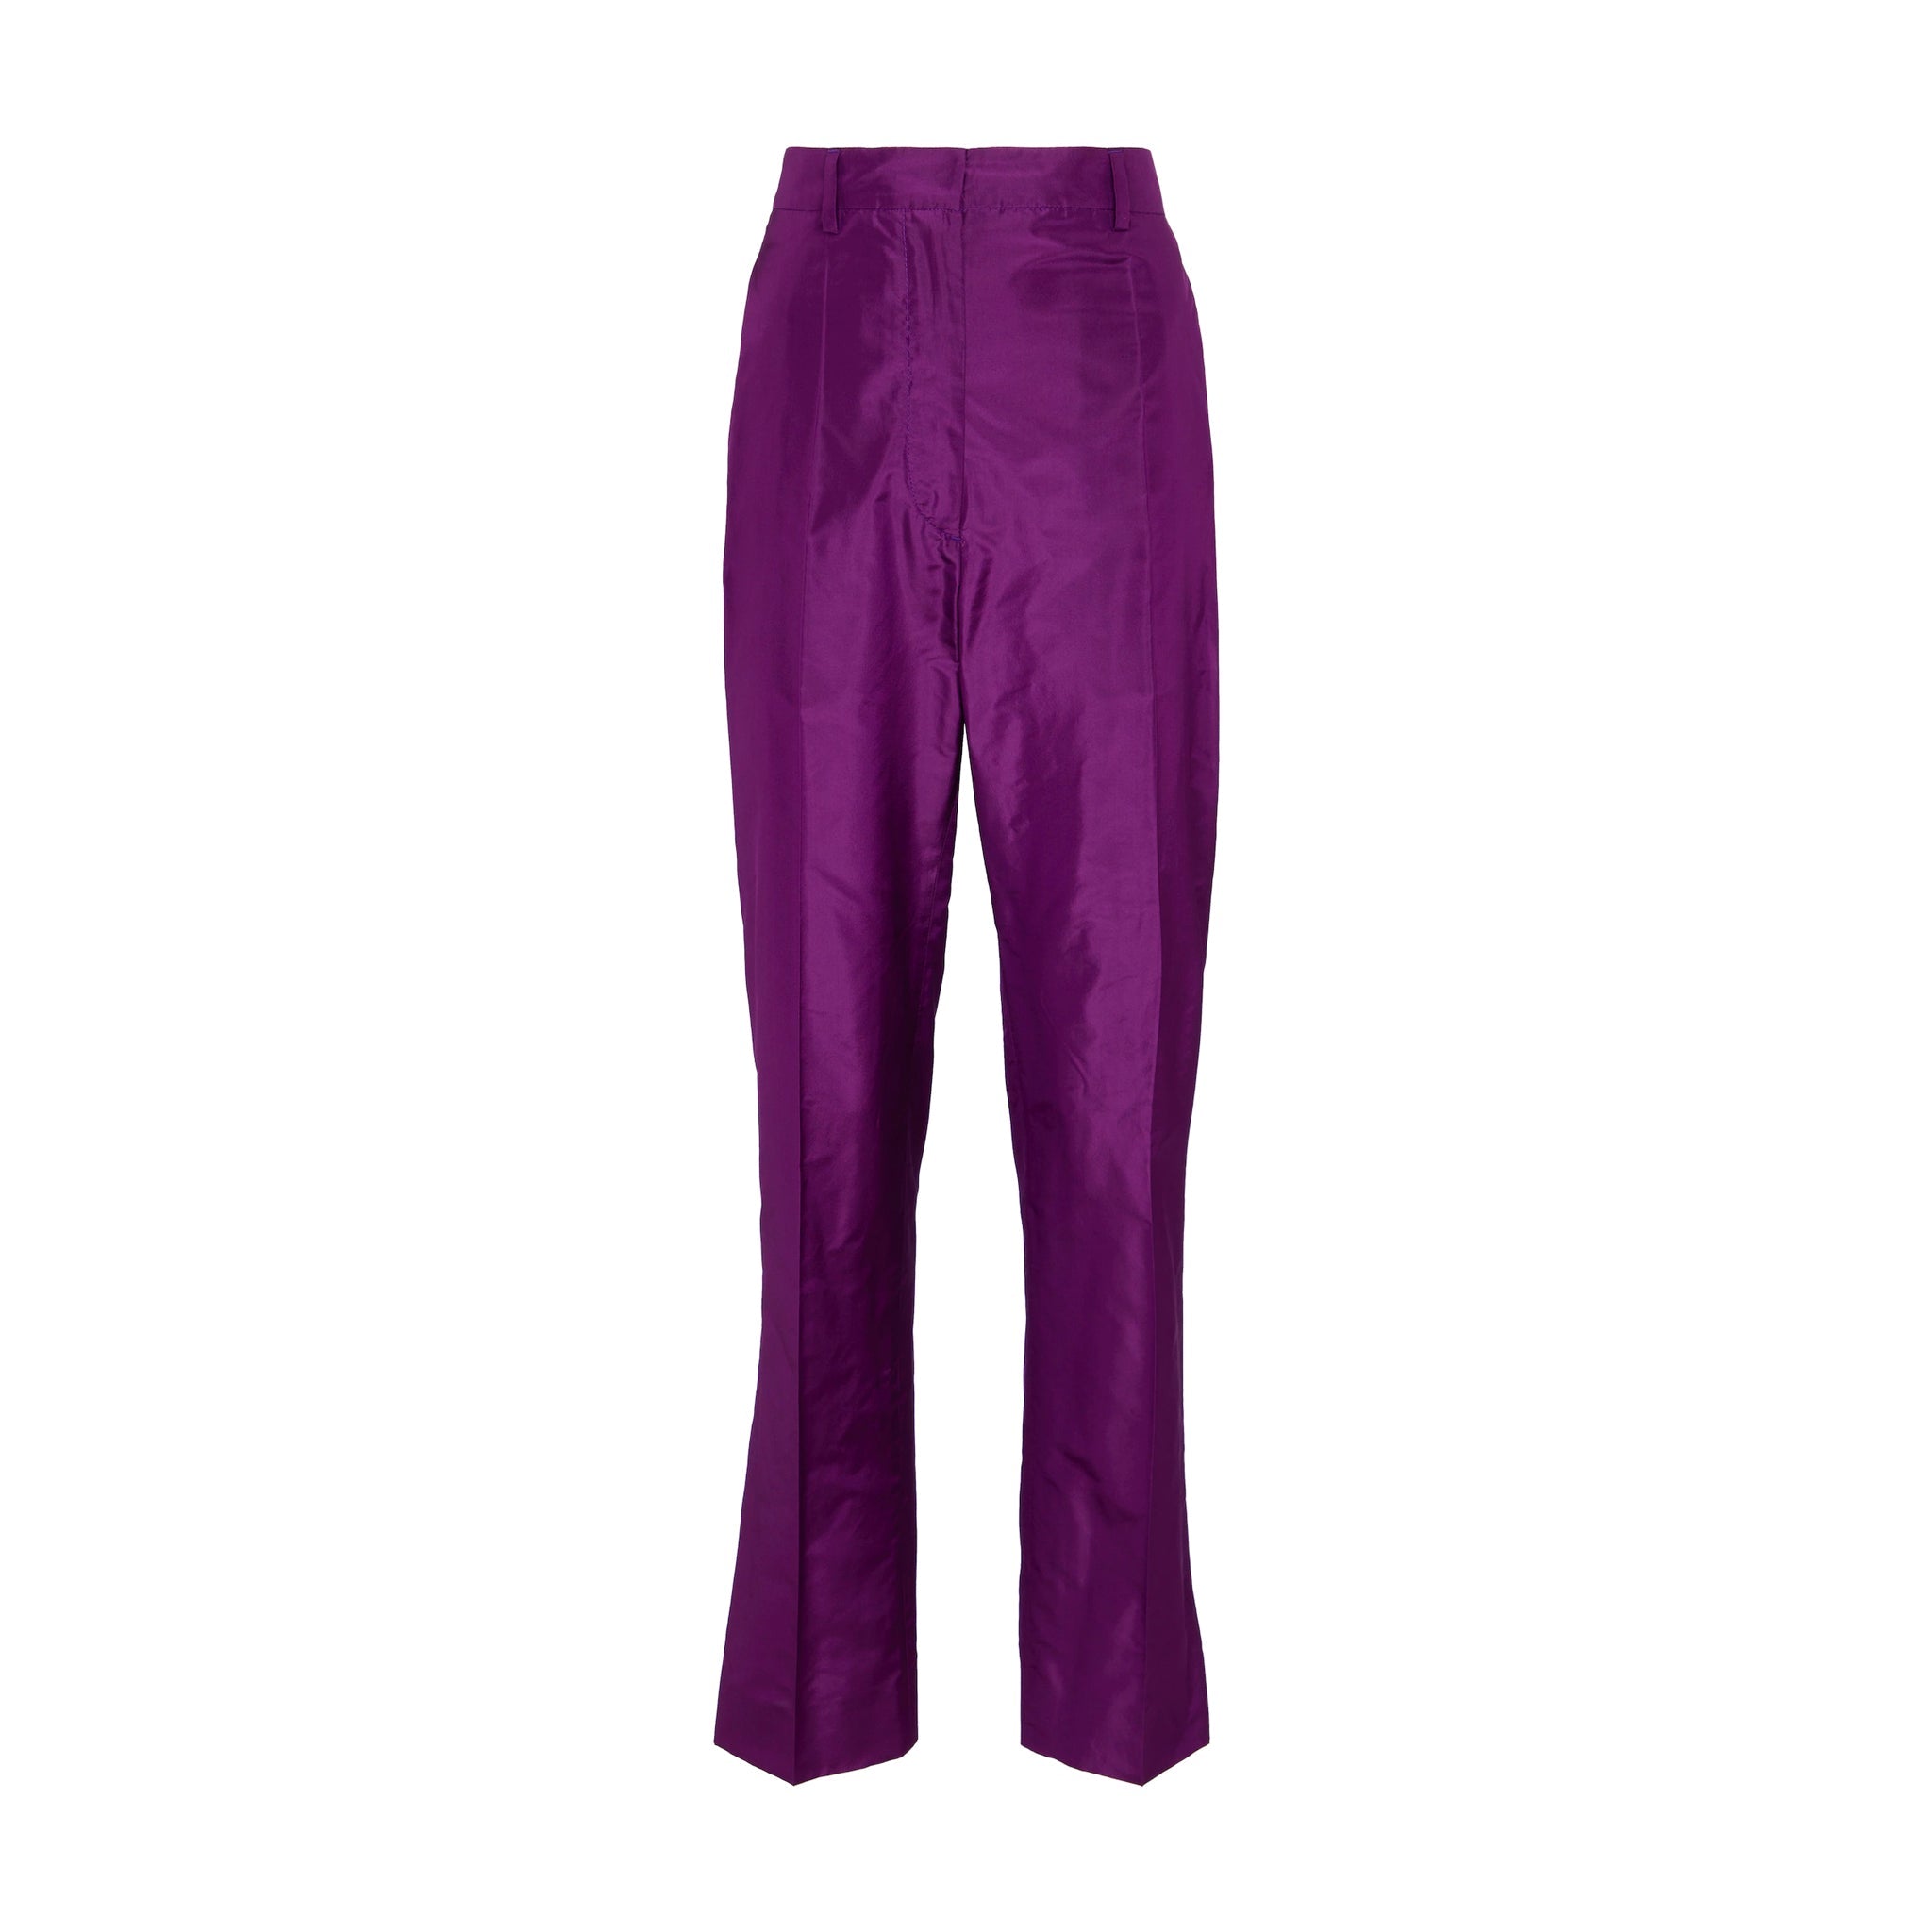 PRADA-Outlet-Sale-Prada Taffeta Silk Pants-WOMEN CLOTHING-PURPLE-40-ARCHIVIST